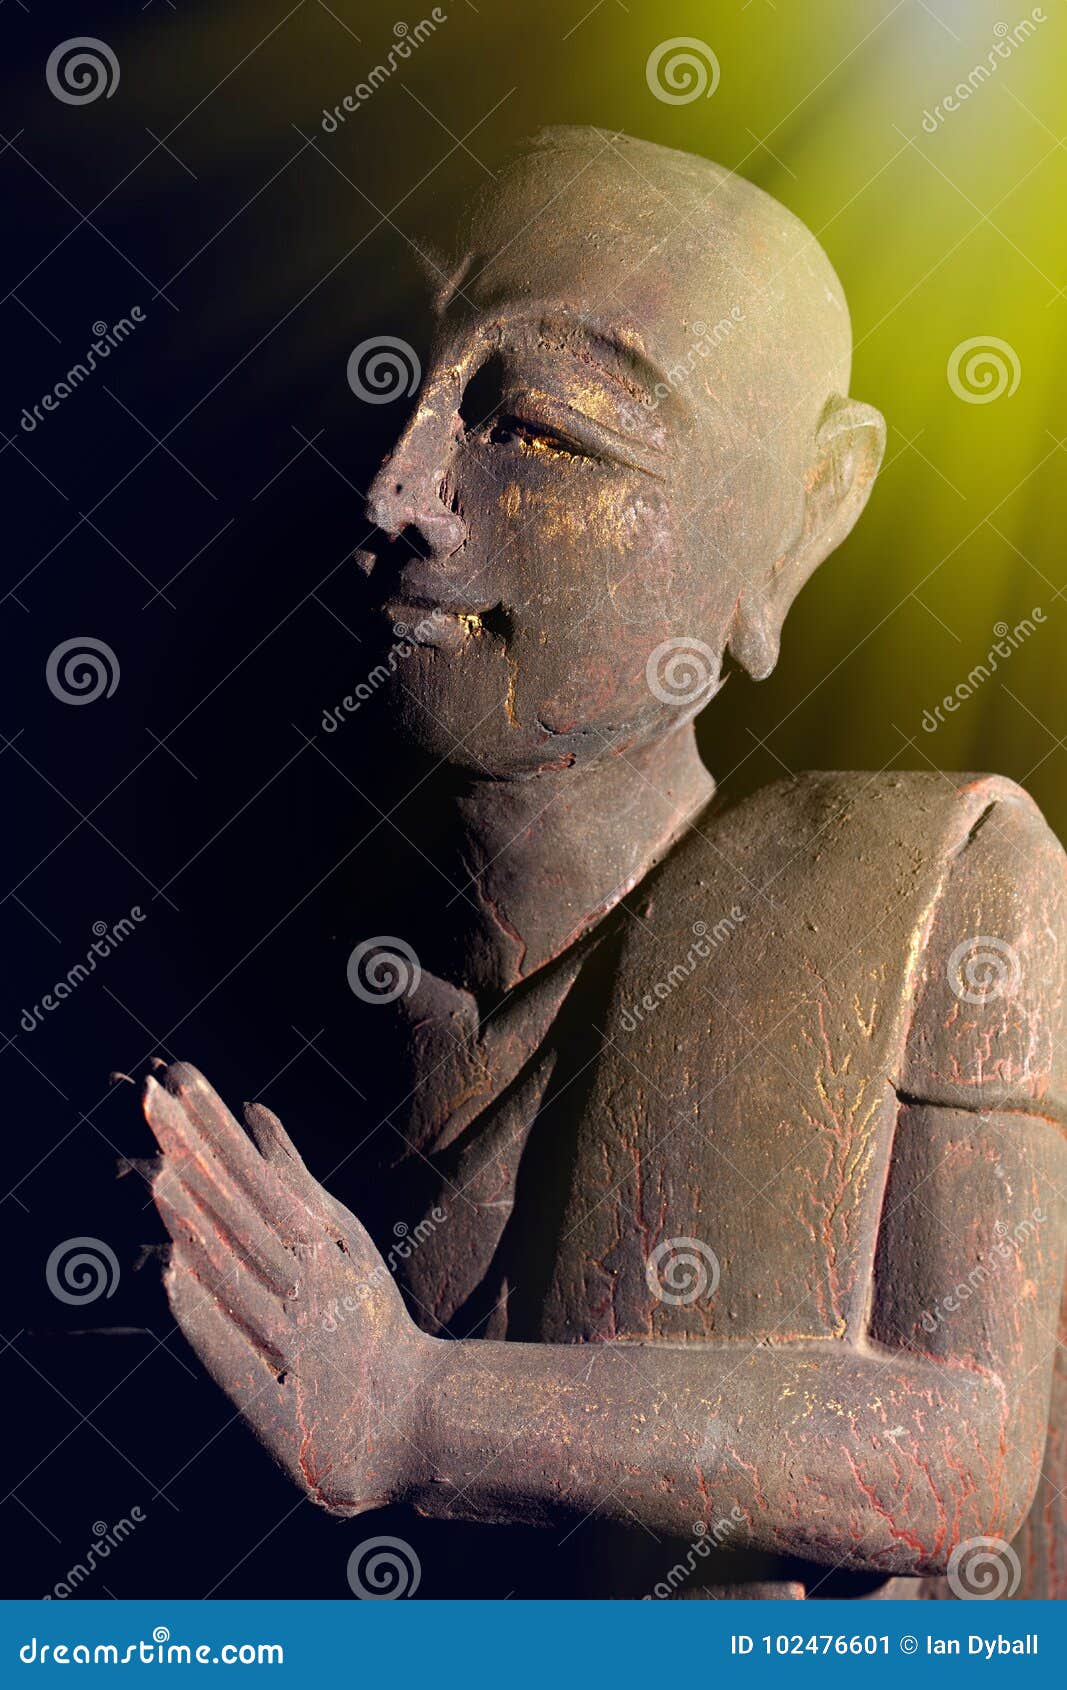 divine light of spiritual awakening. buddhist monk in serene prayer pose.